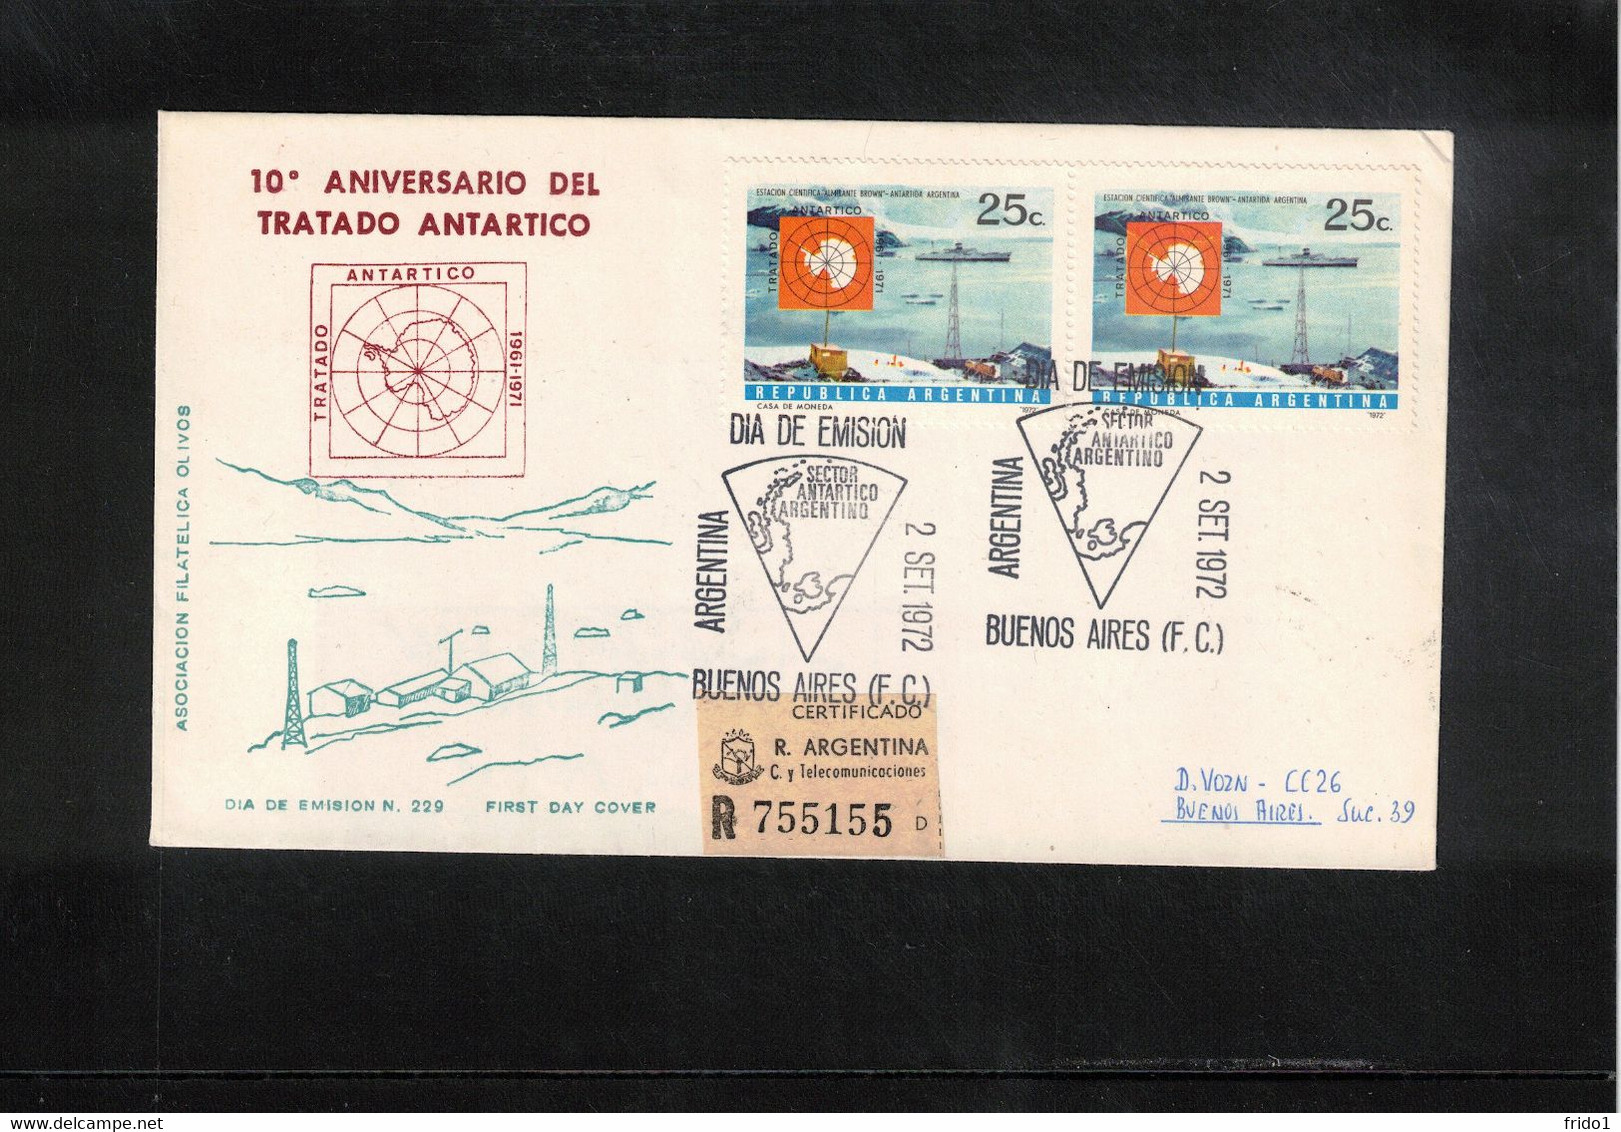 Argentina 1972 10th Anniversary Of Antarctica Treaty Interesting Registered Letter - Antarctic Treaty